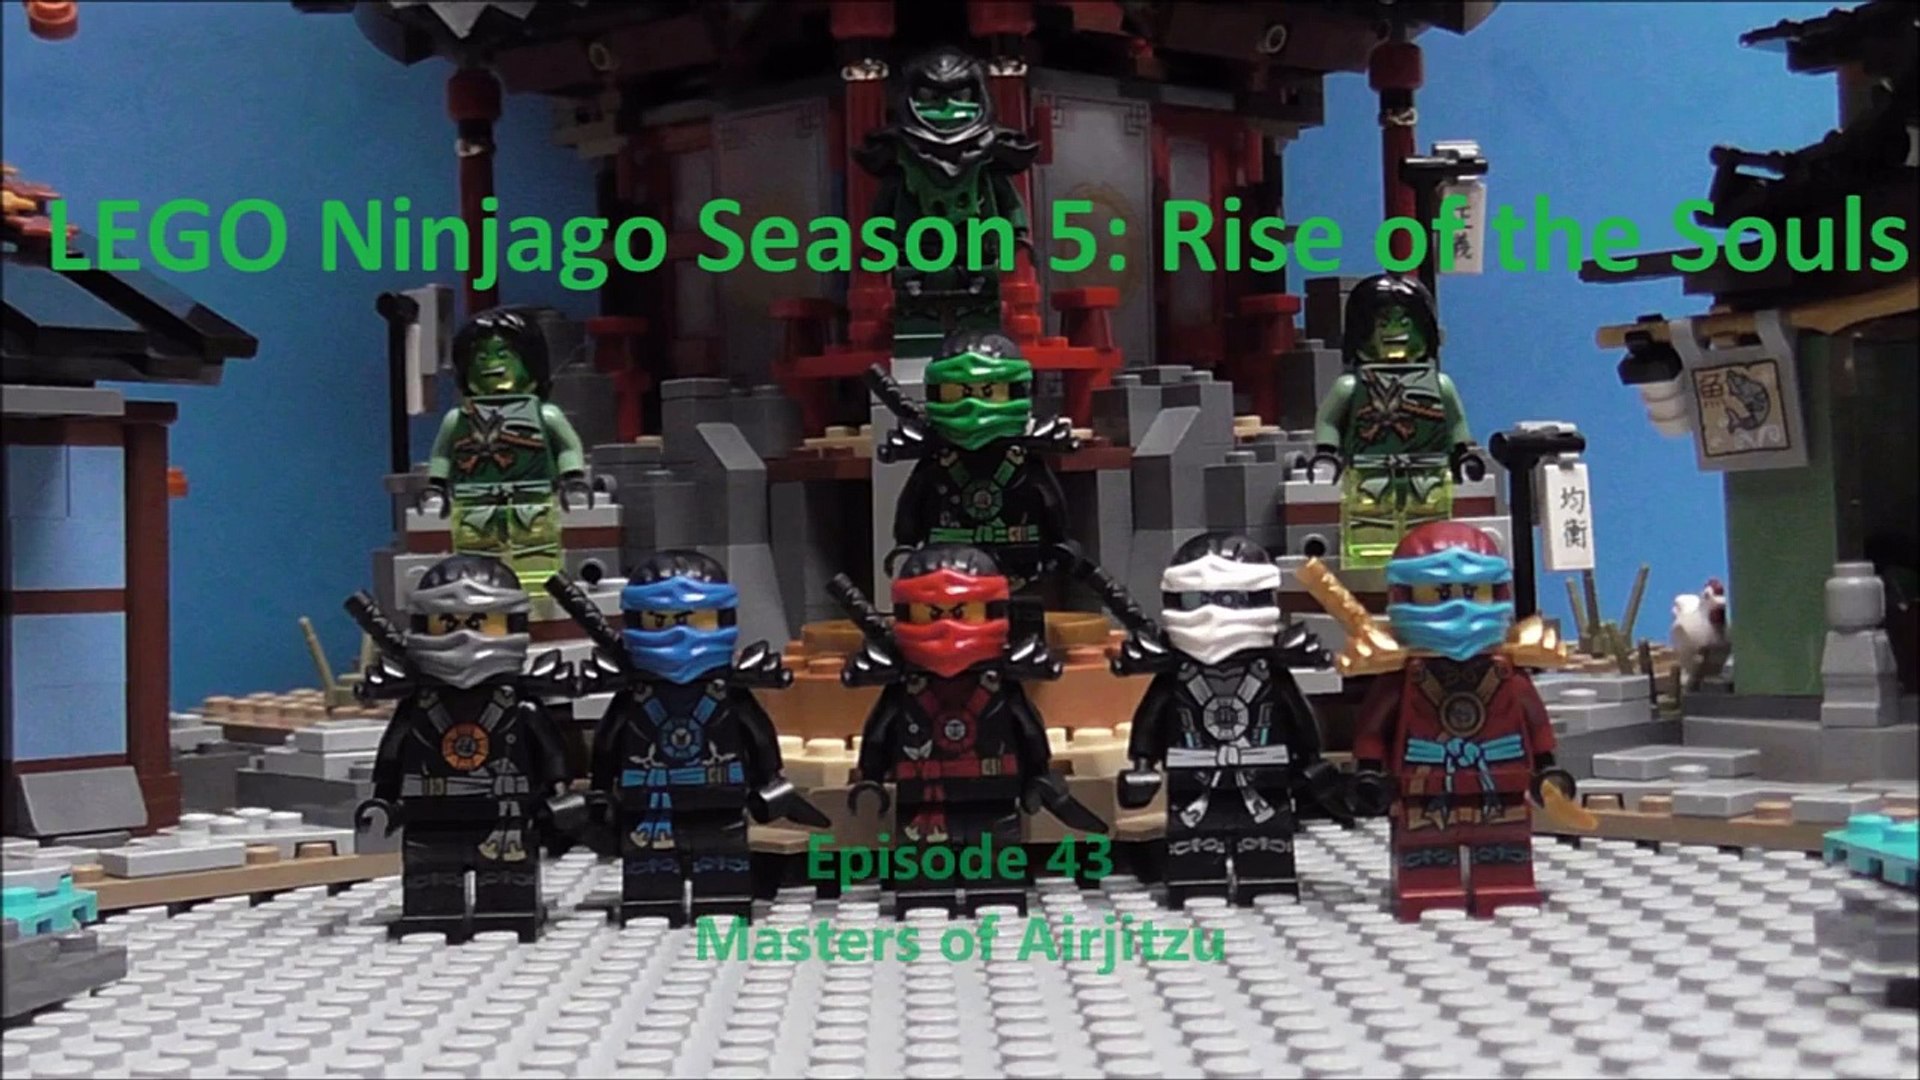 LEGO Ninjago Episode 43 Masters of Airjitzu! - video Dailymotion